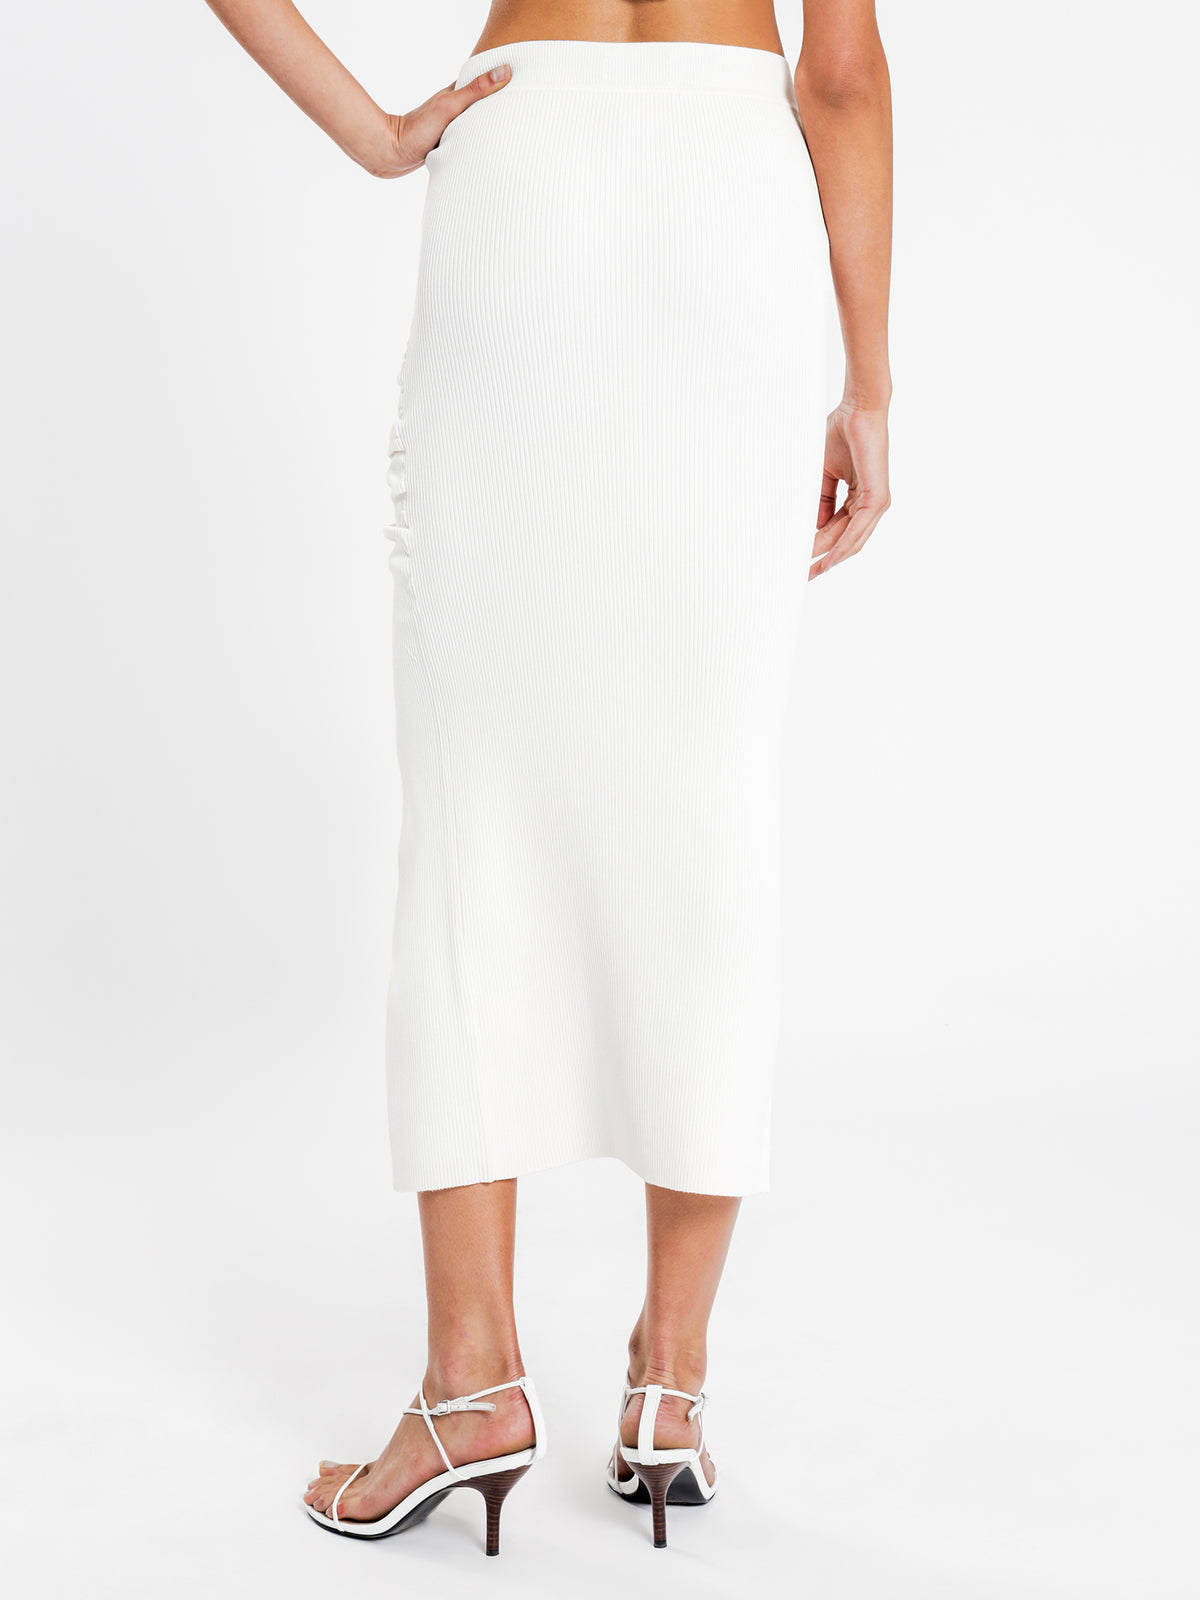 Lola Midi Skirt in Off White